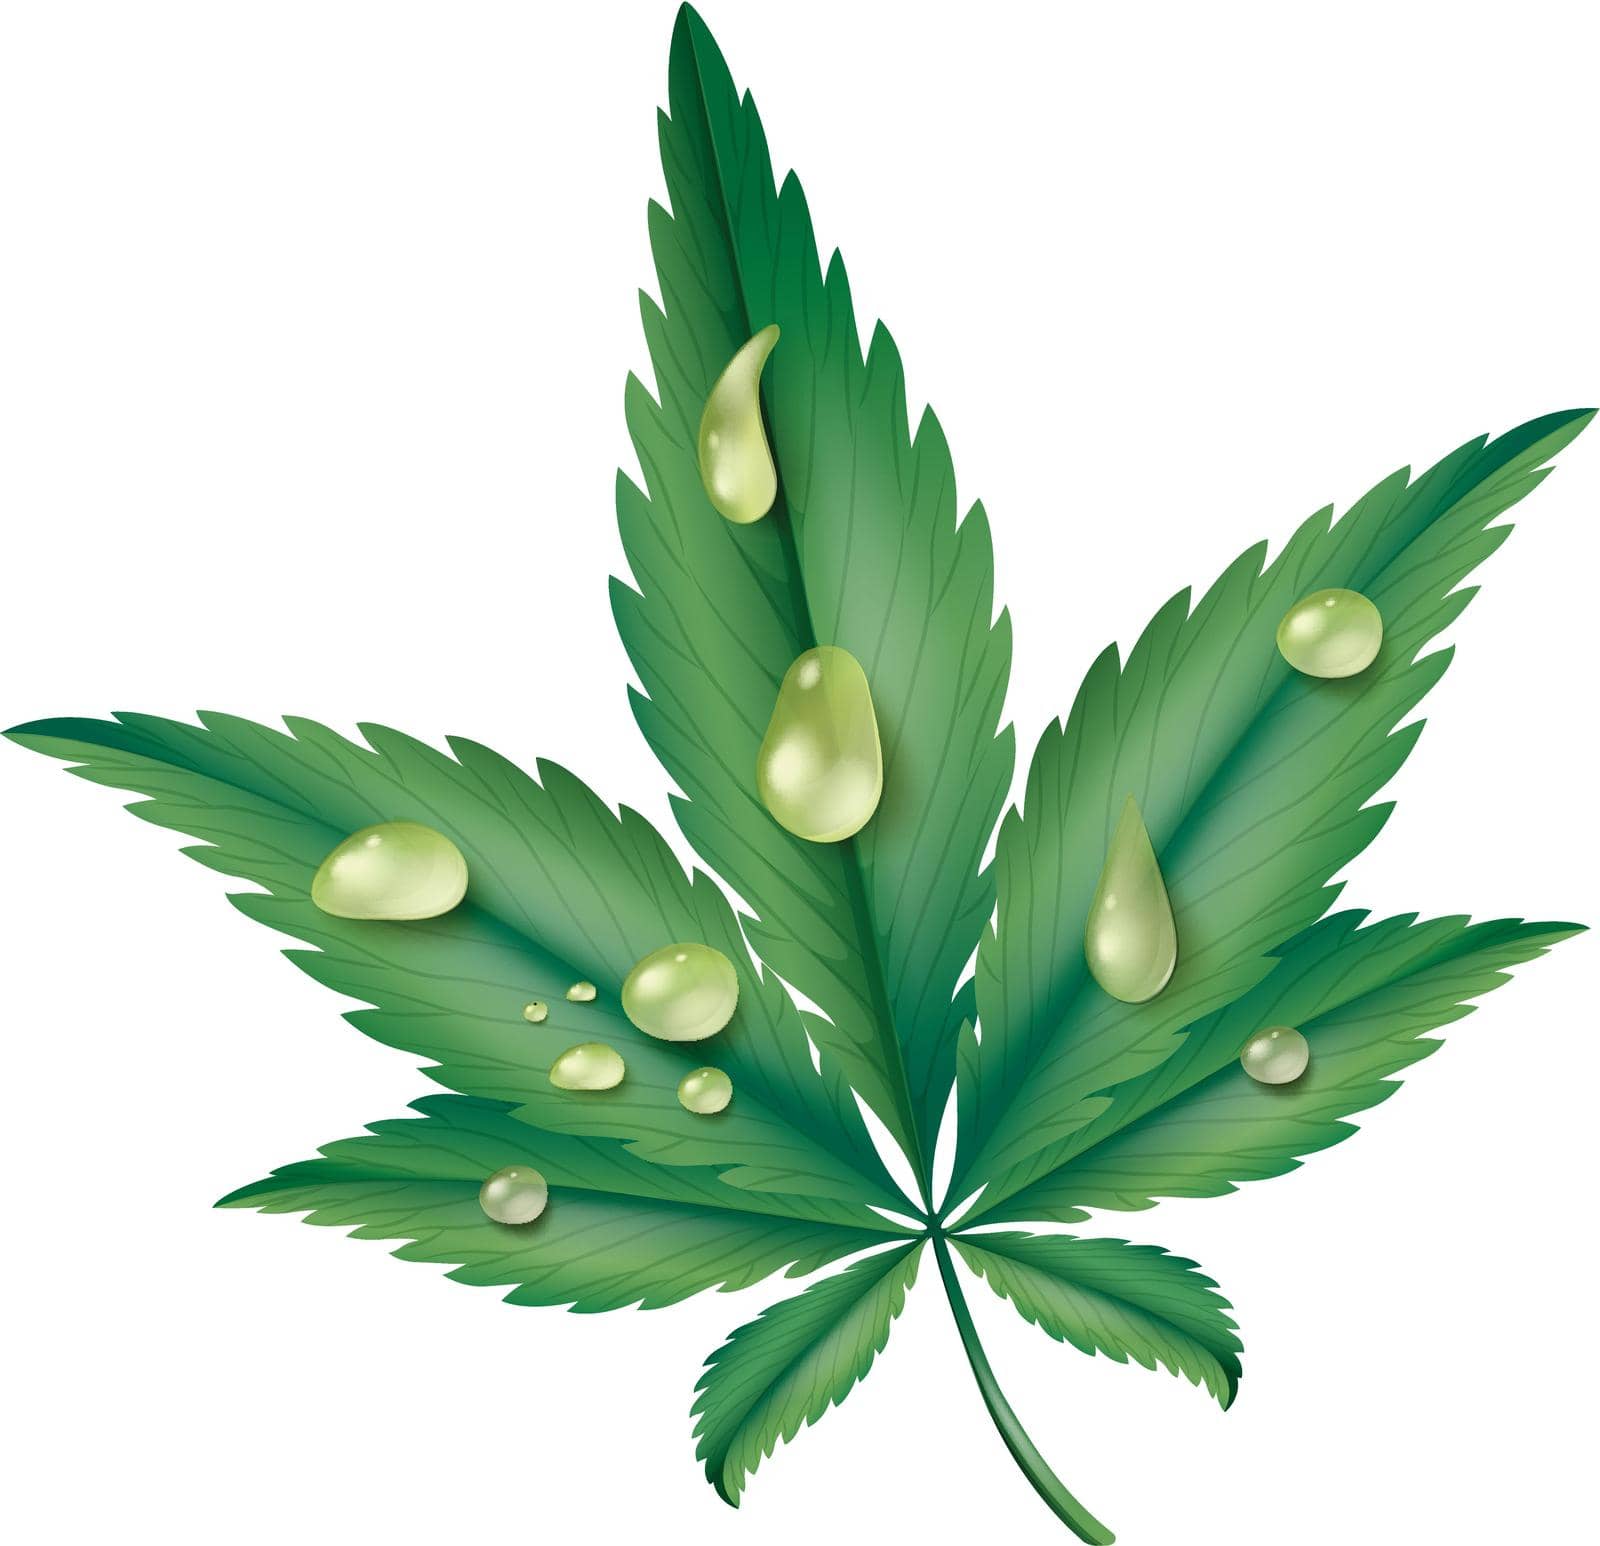 Water drops on green leaf illustration